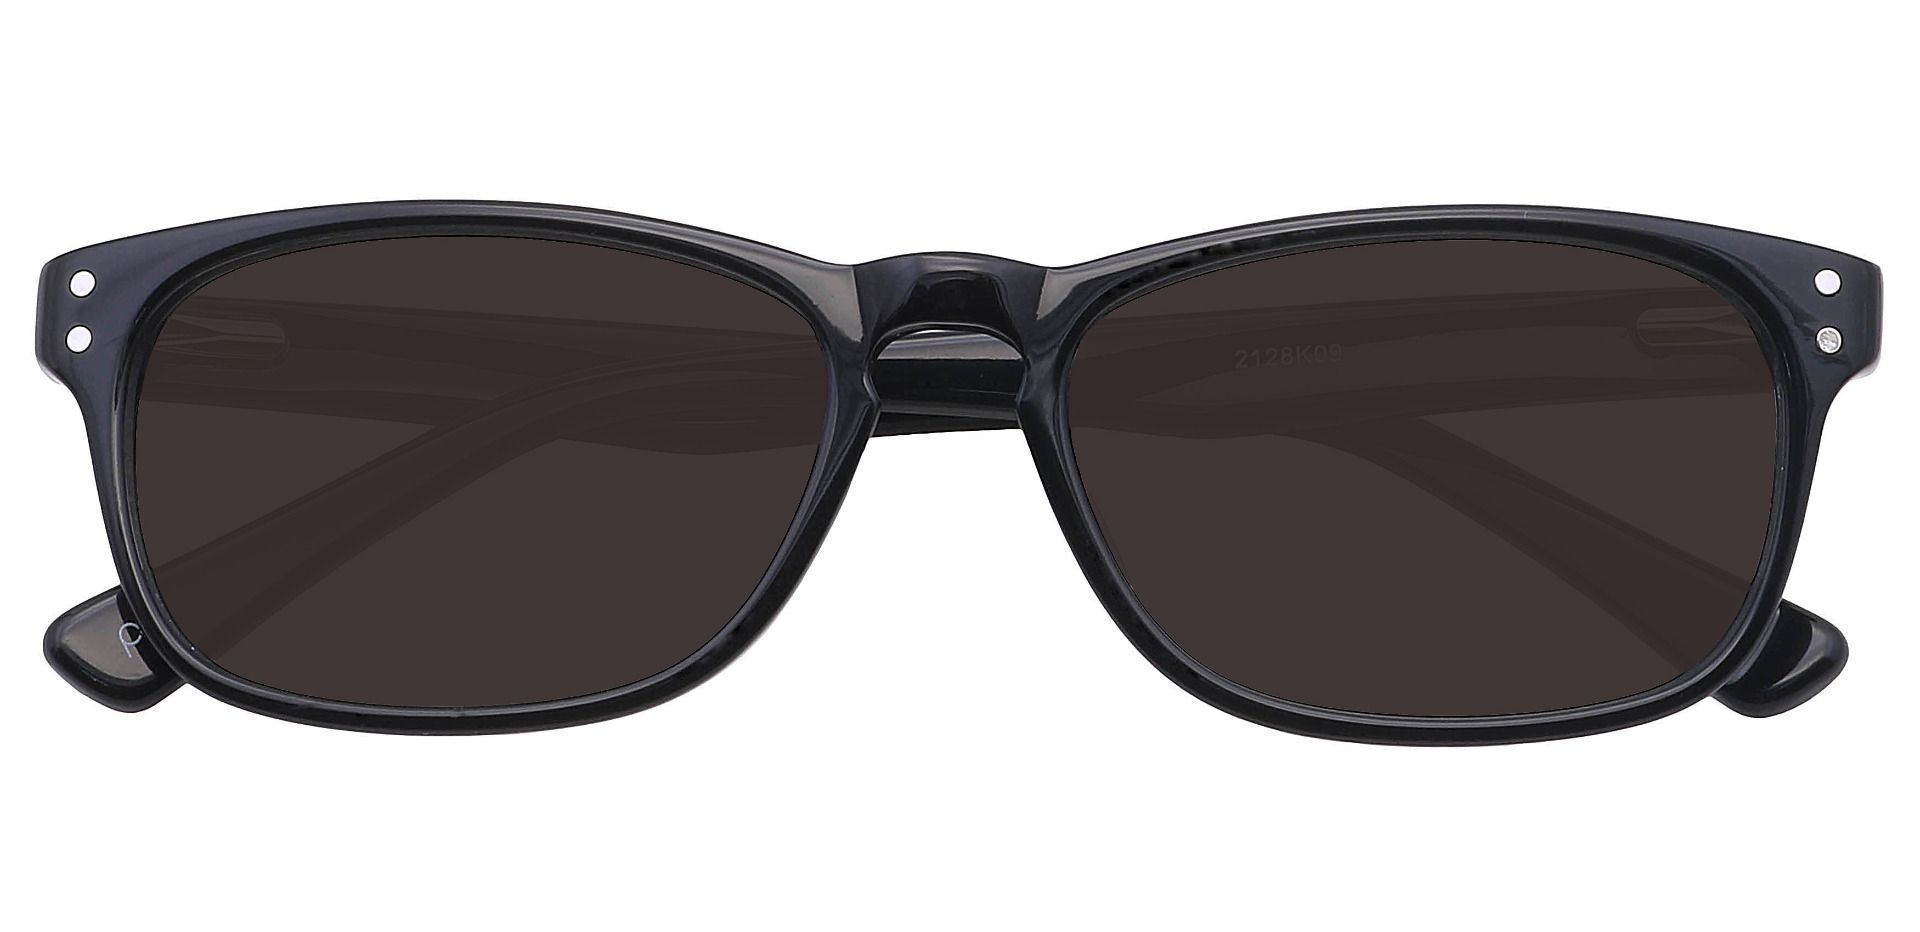 Morris Rectangle Prescription Sunglasses - Black Frame With Gray Lenses